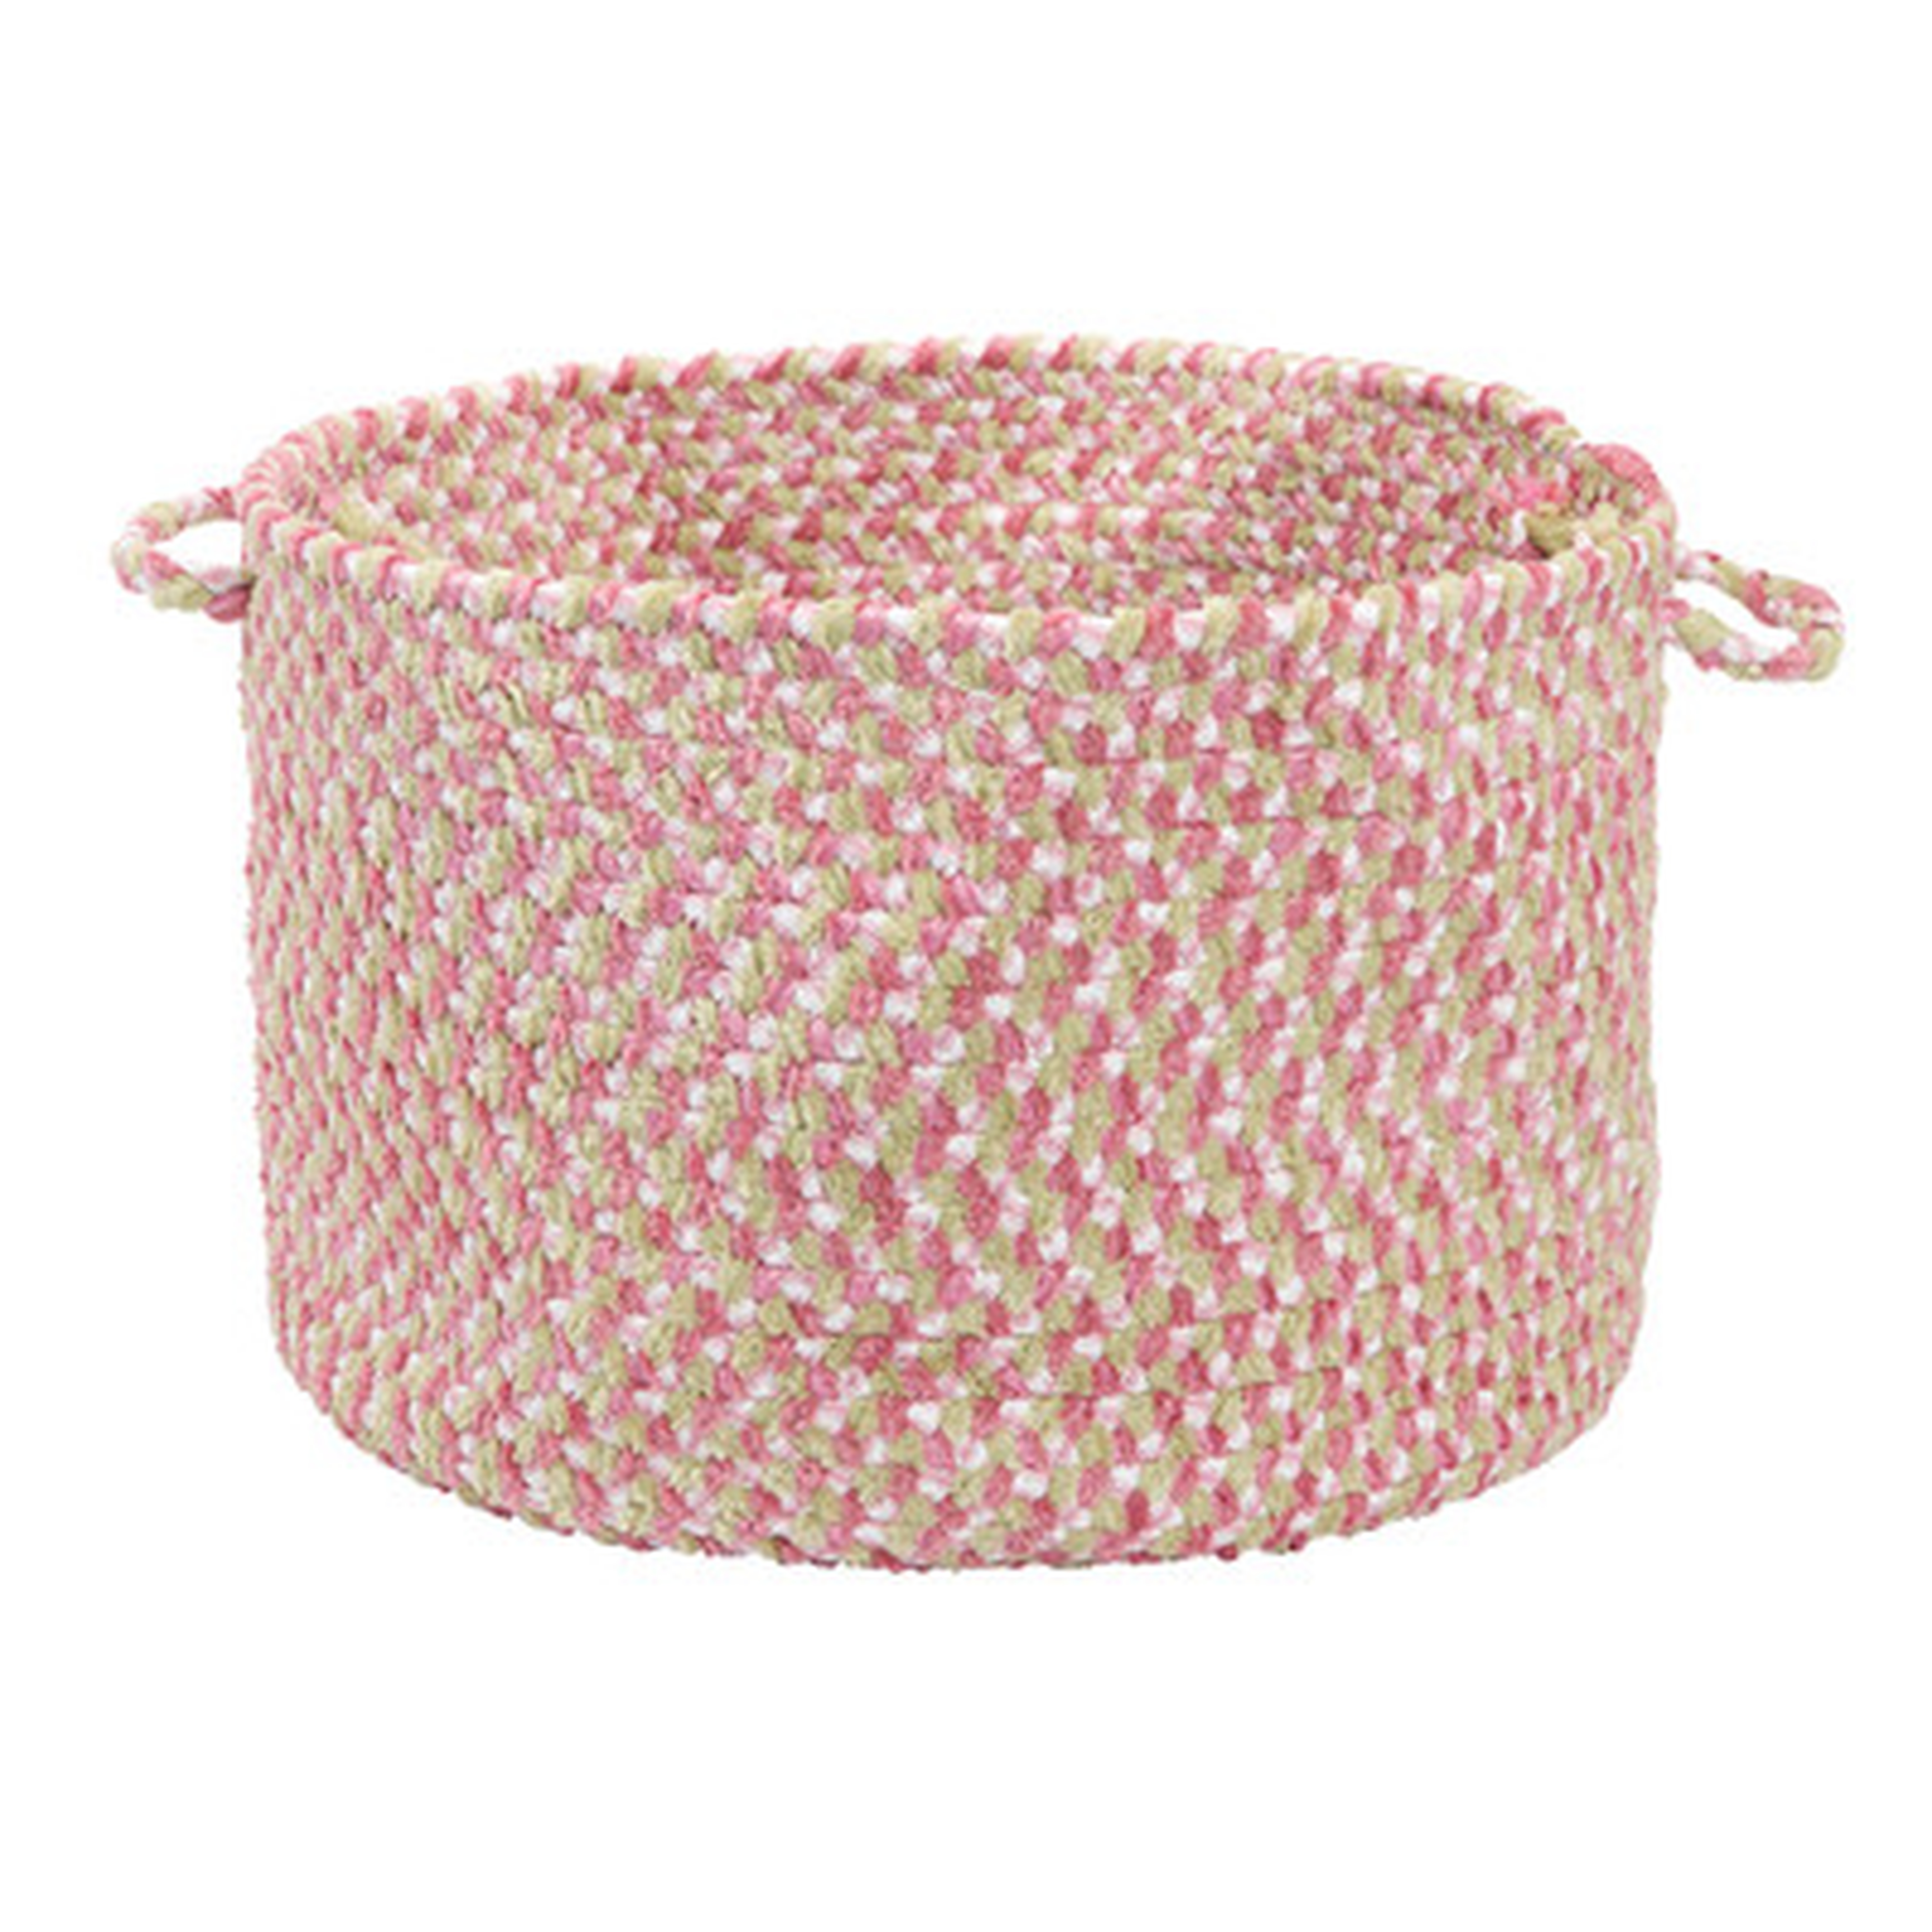 Tea Party Pink Utility Basket - Wayfair